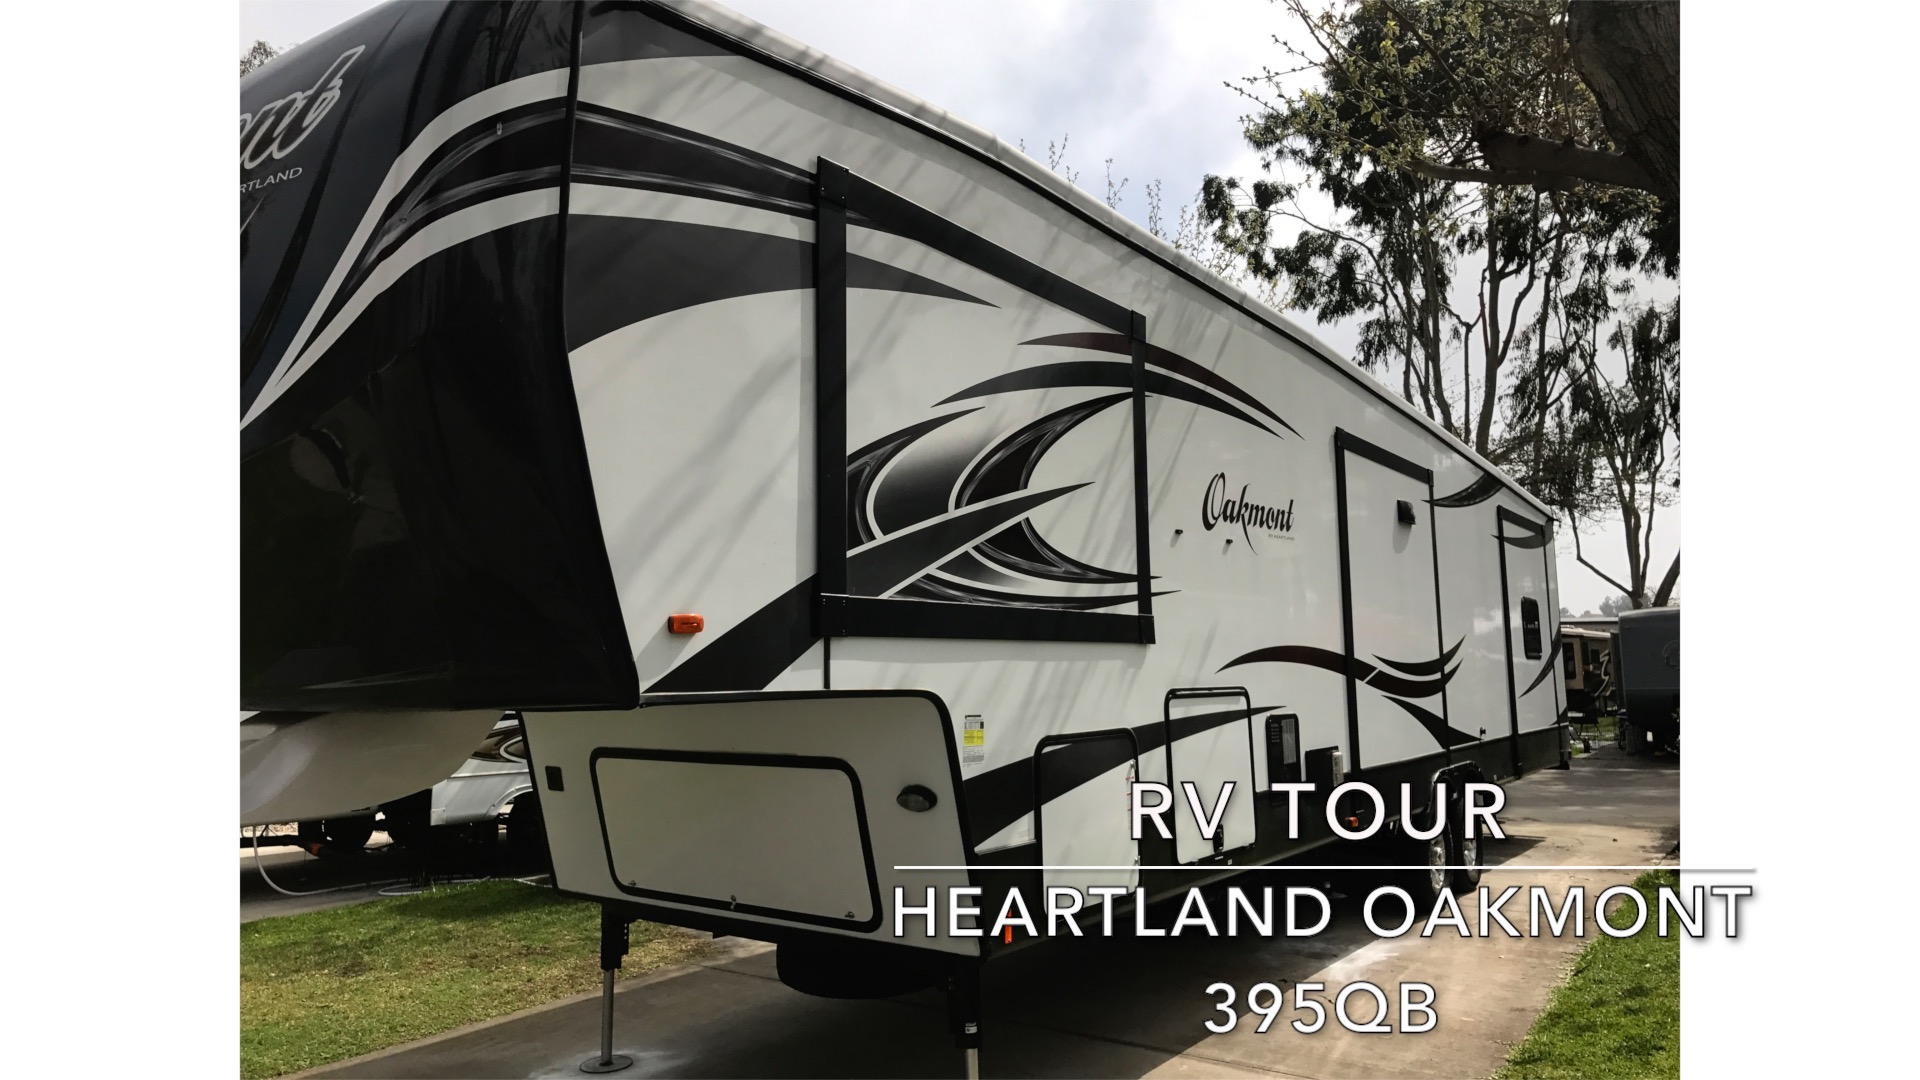 Video Tour of Our RV: Heartland Oakmont 395QB